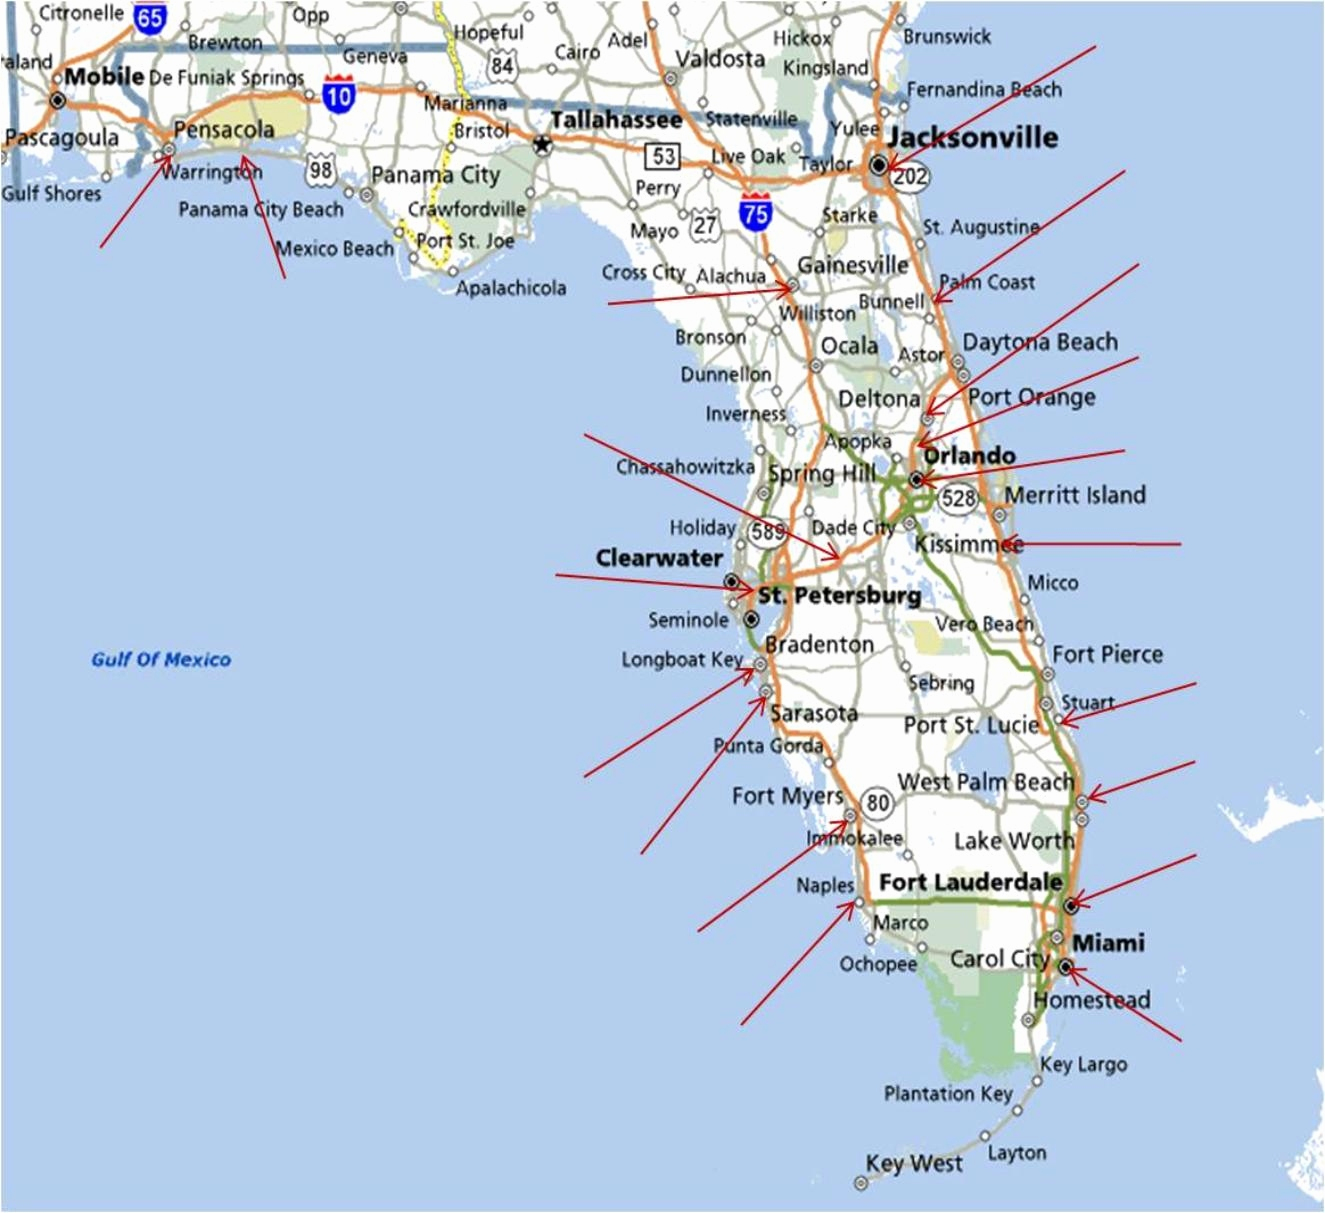 Best East Coast Florida Beaches New Map Florida West Coast Florida - Florida East Coast Beaches Map